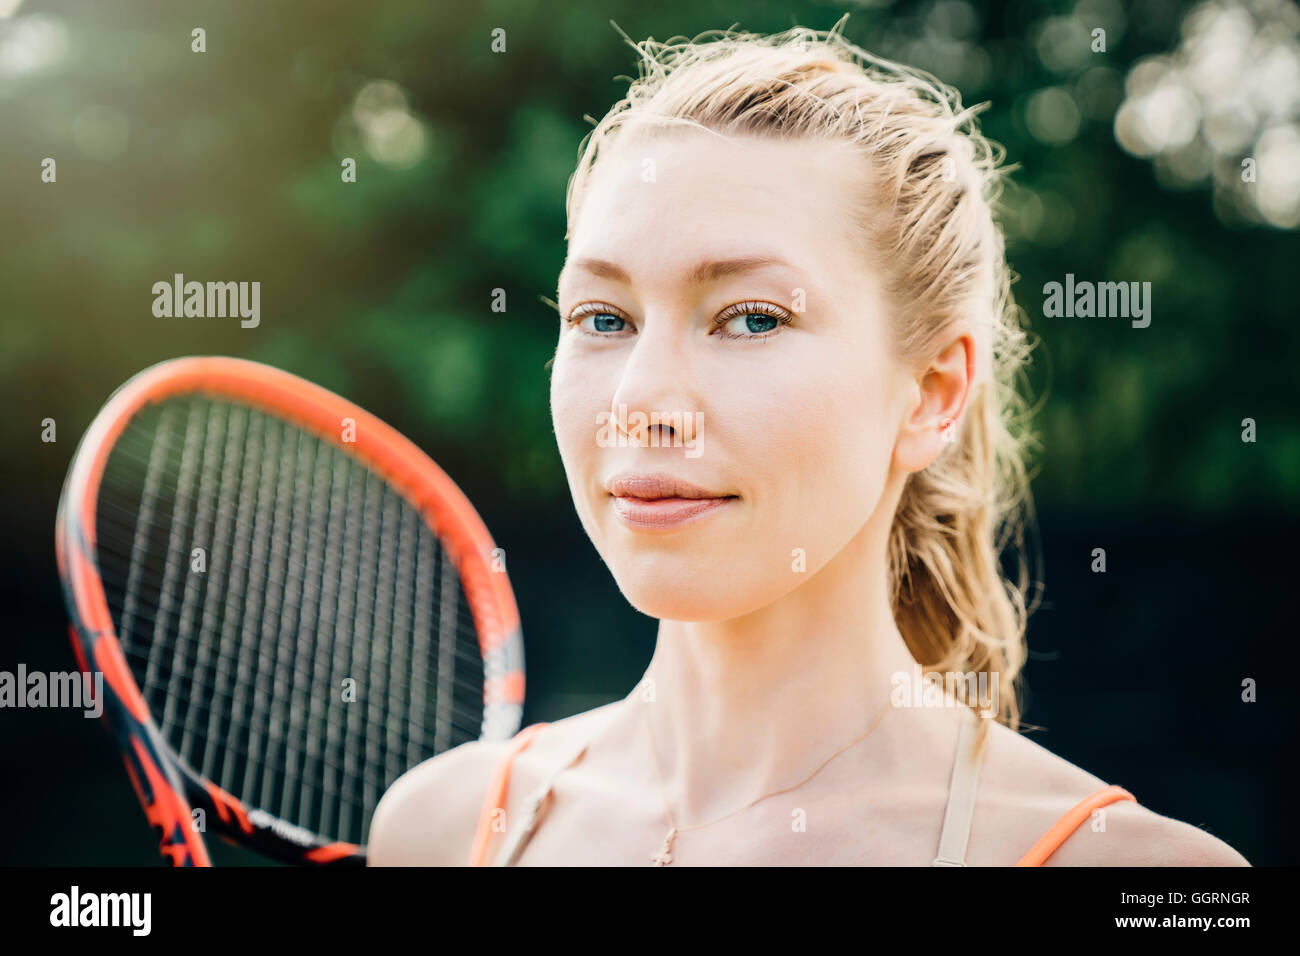 Smiling Caucasian woman holding tennis racket Banque D'Images